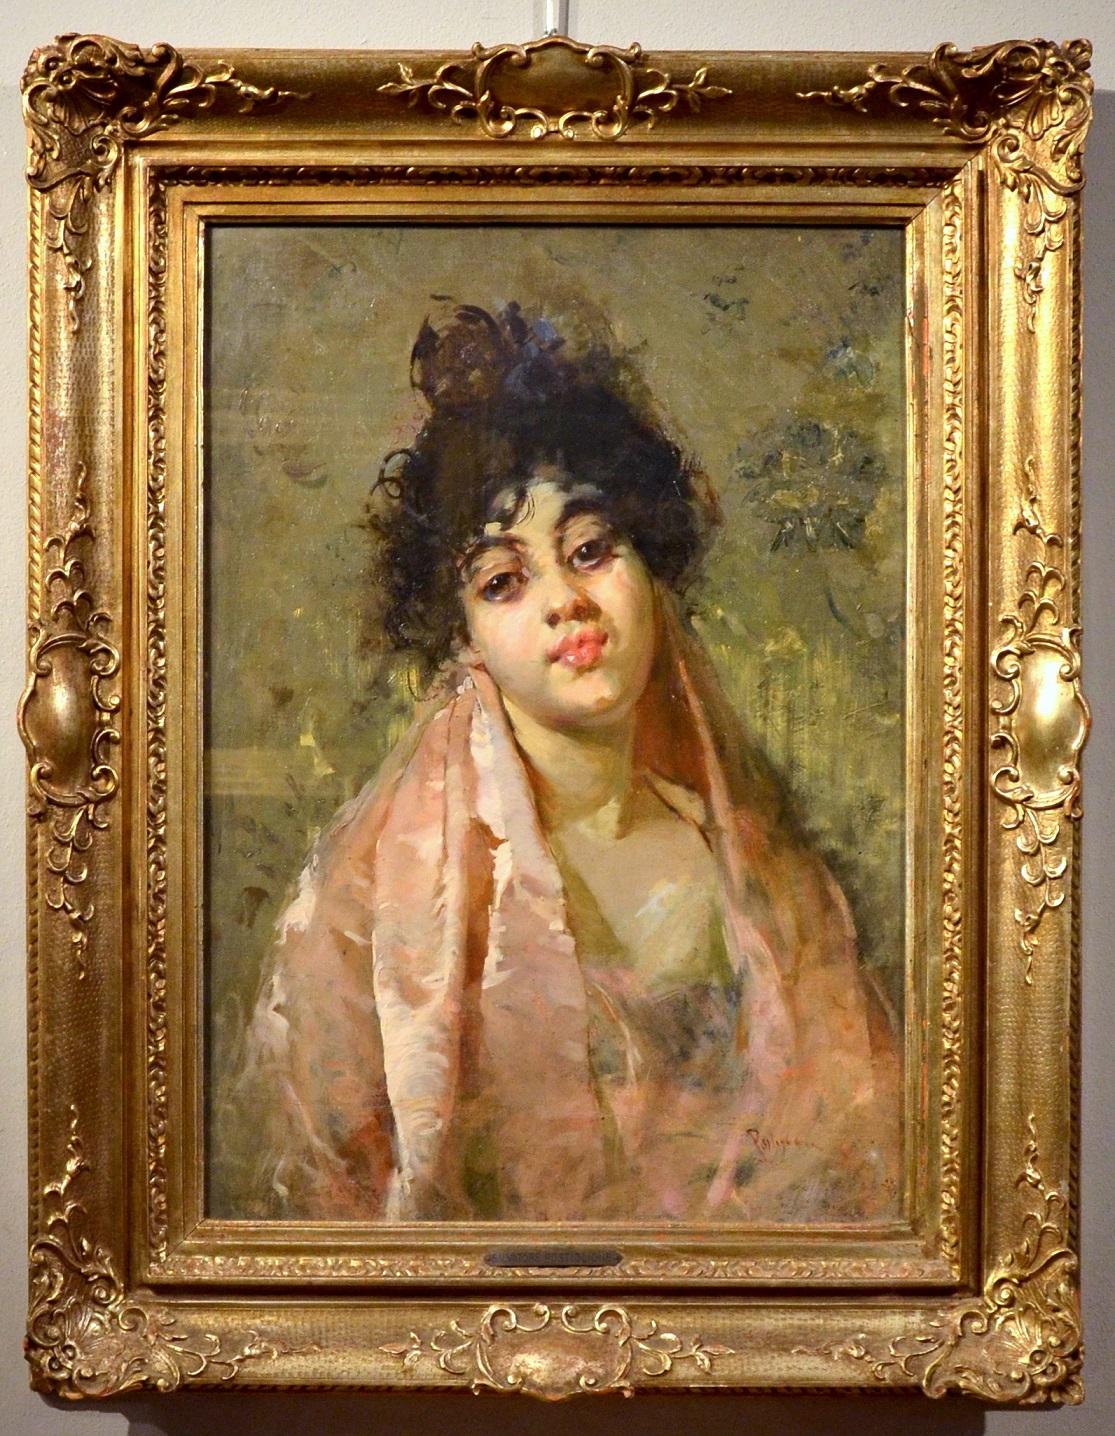 Salvatore Postiglione) Paint Oil on canvas Signed Portrait Woman Impressionism - Painting by Postiglione Salvatore (Naples 1861 - 1906)